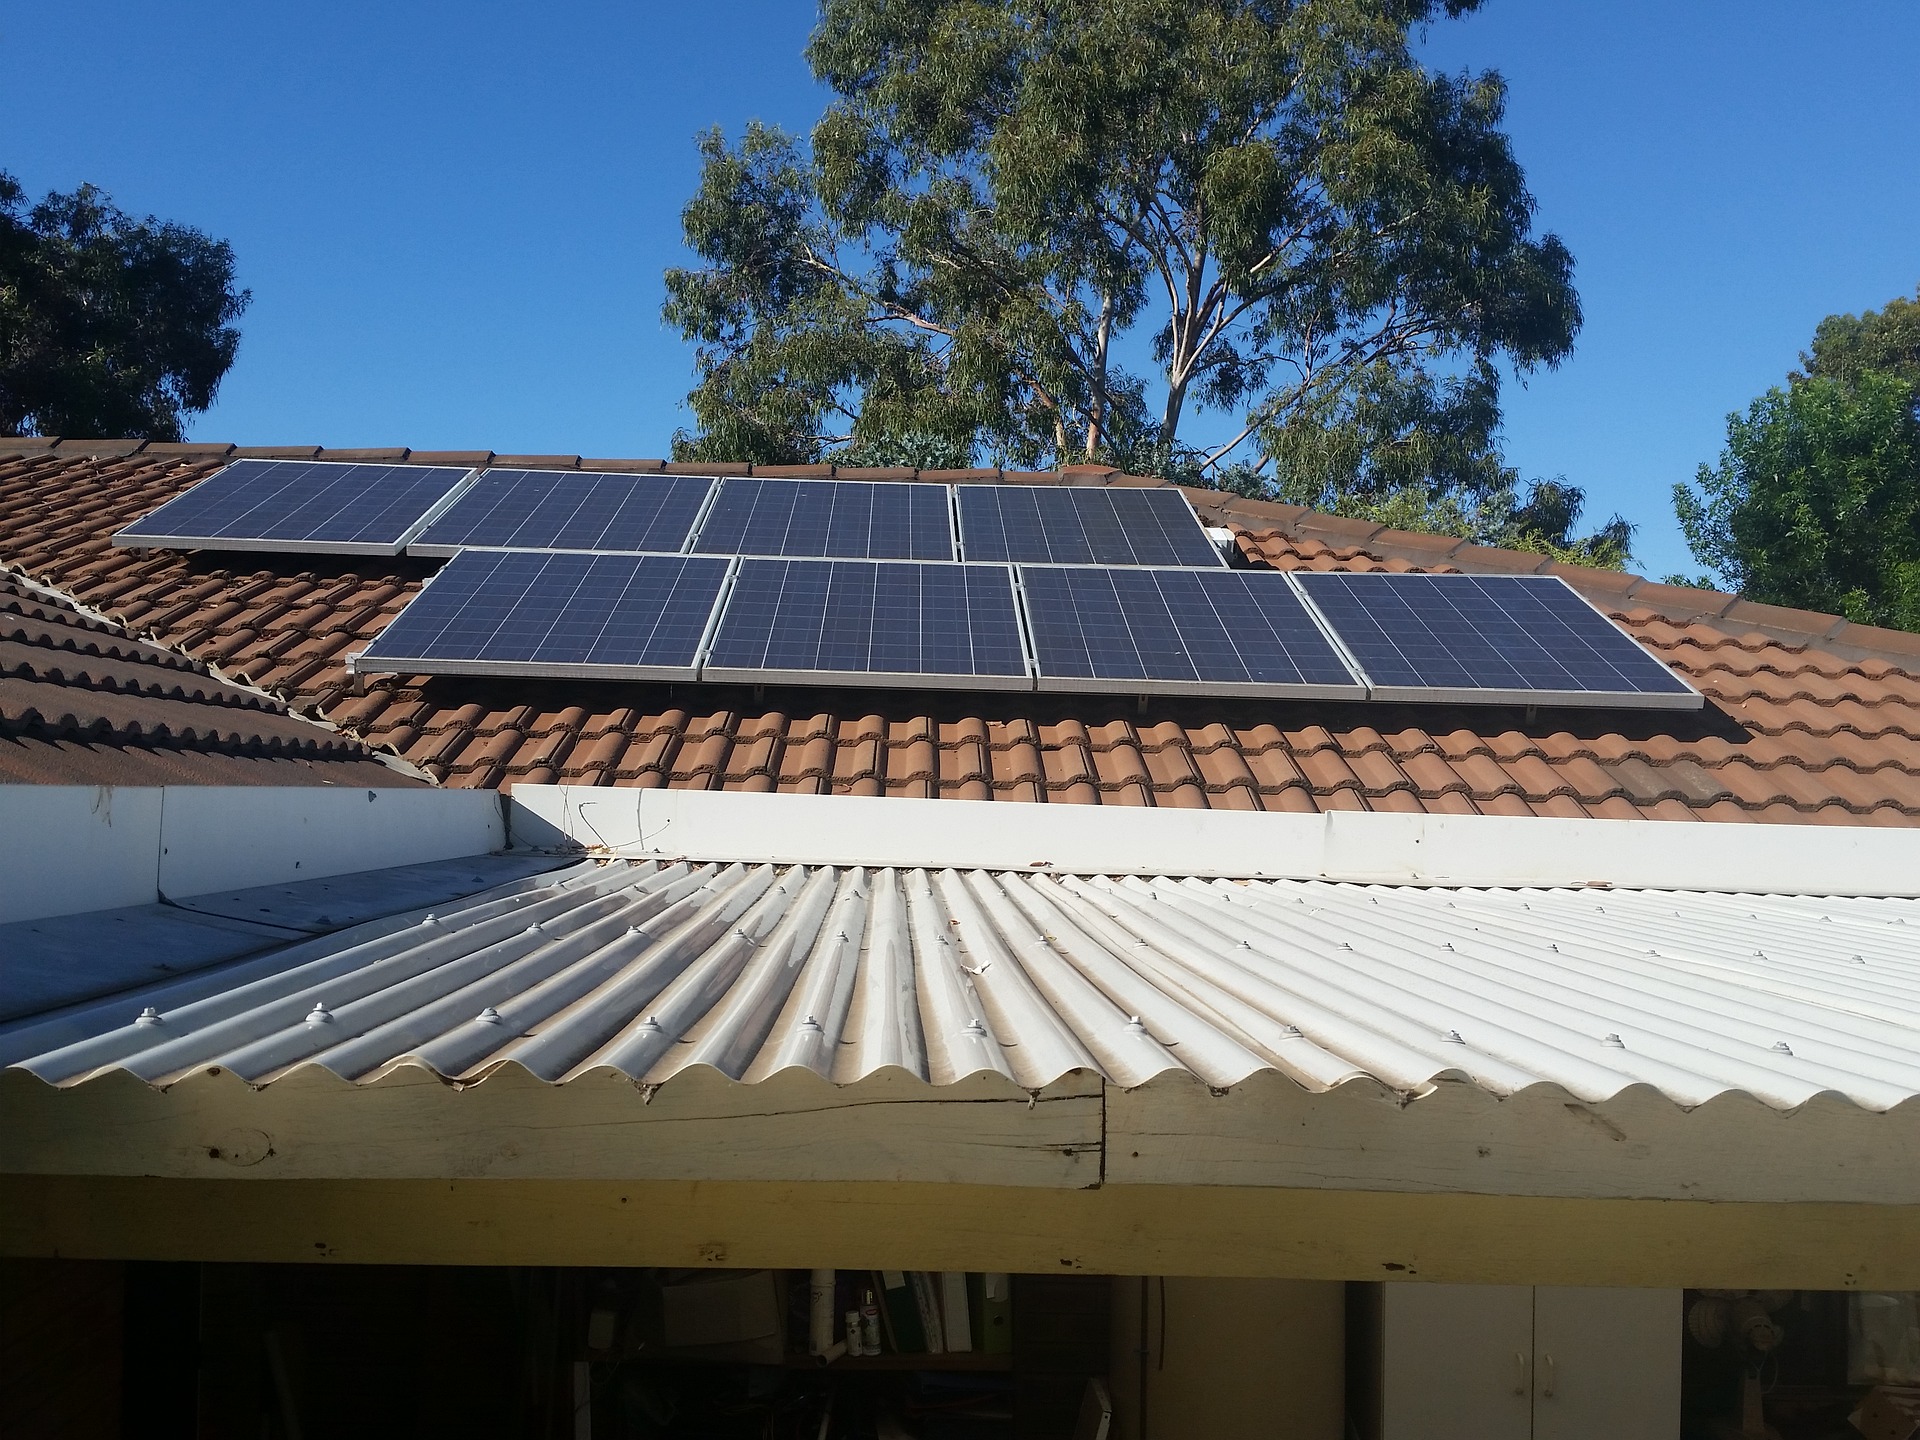 A House with a Solar Panel